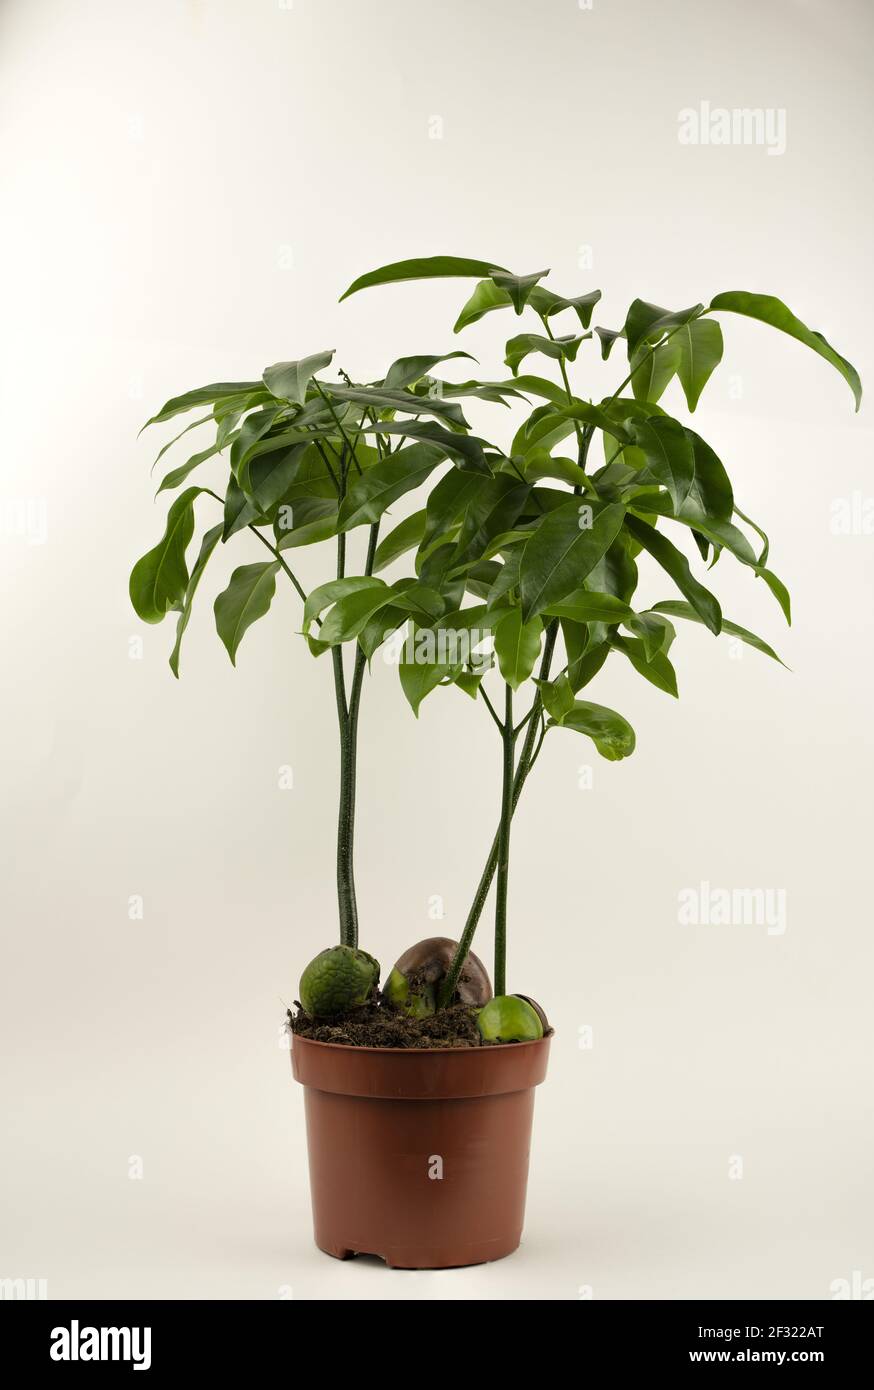 Castanospermum australe in pot with white background Stock Photo